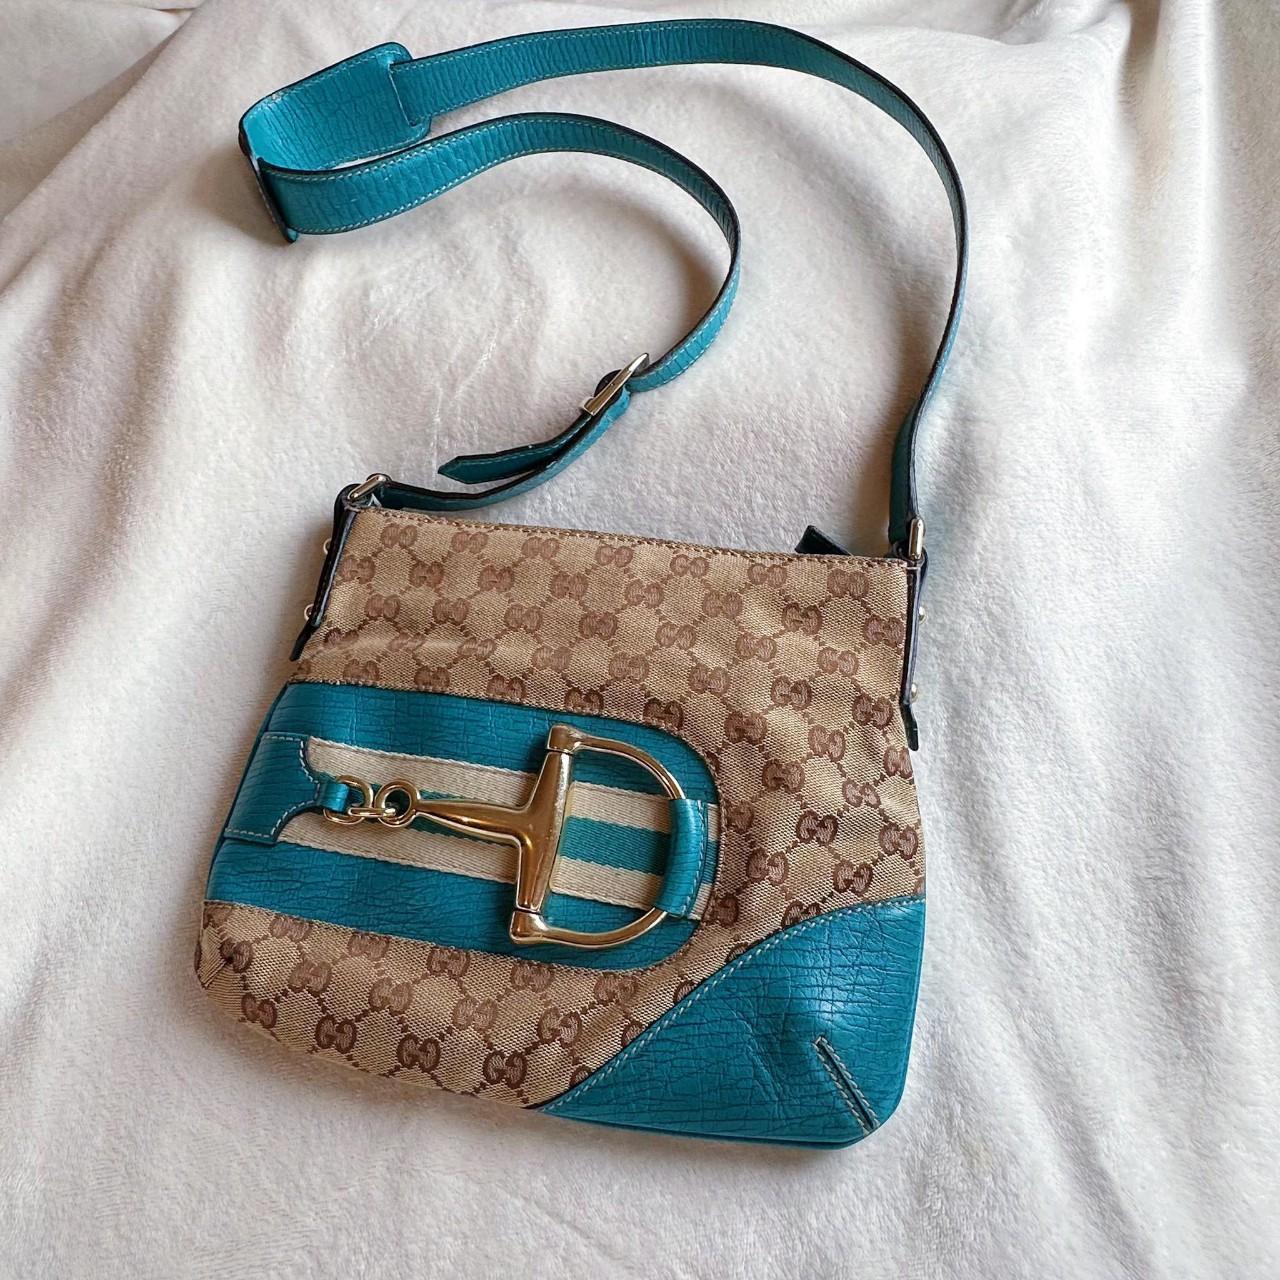 Vintage Gucci Monogram Bag